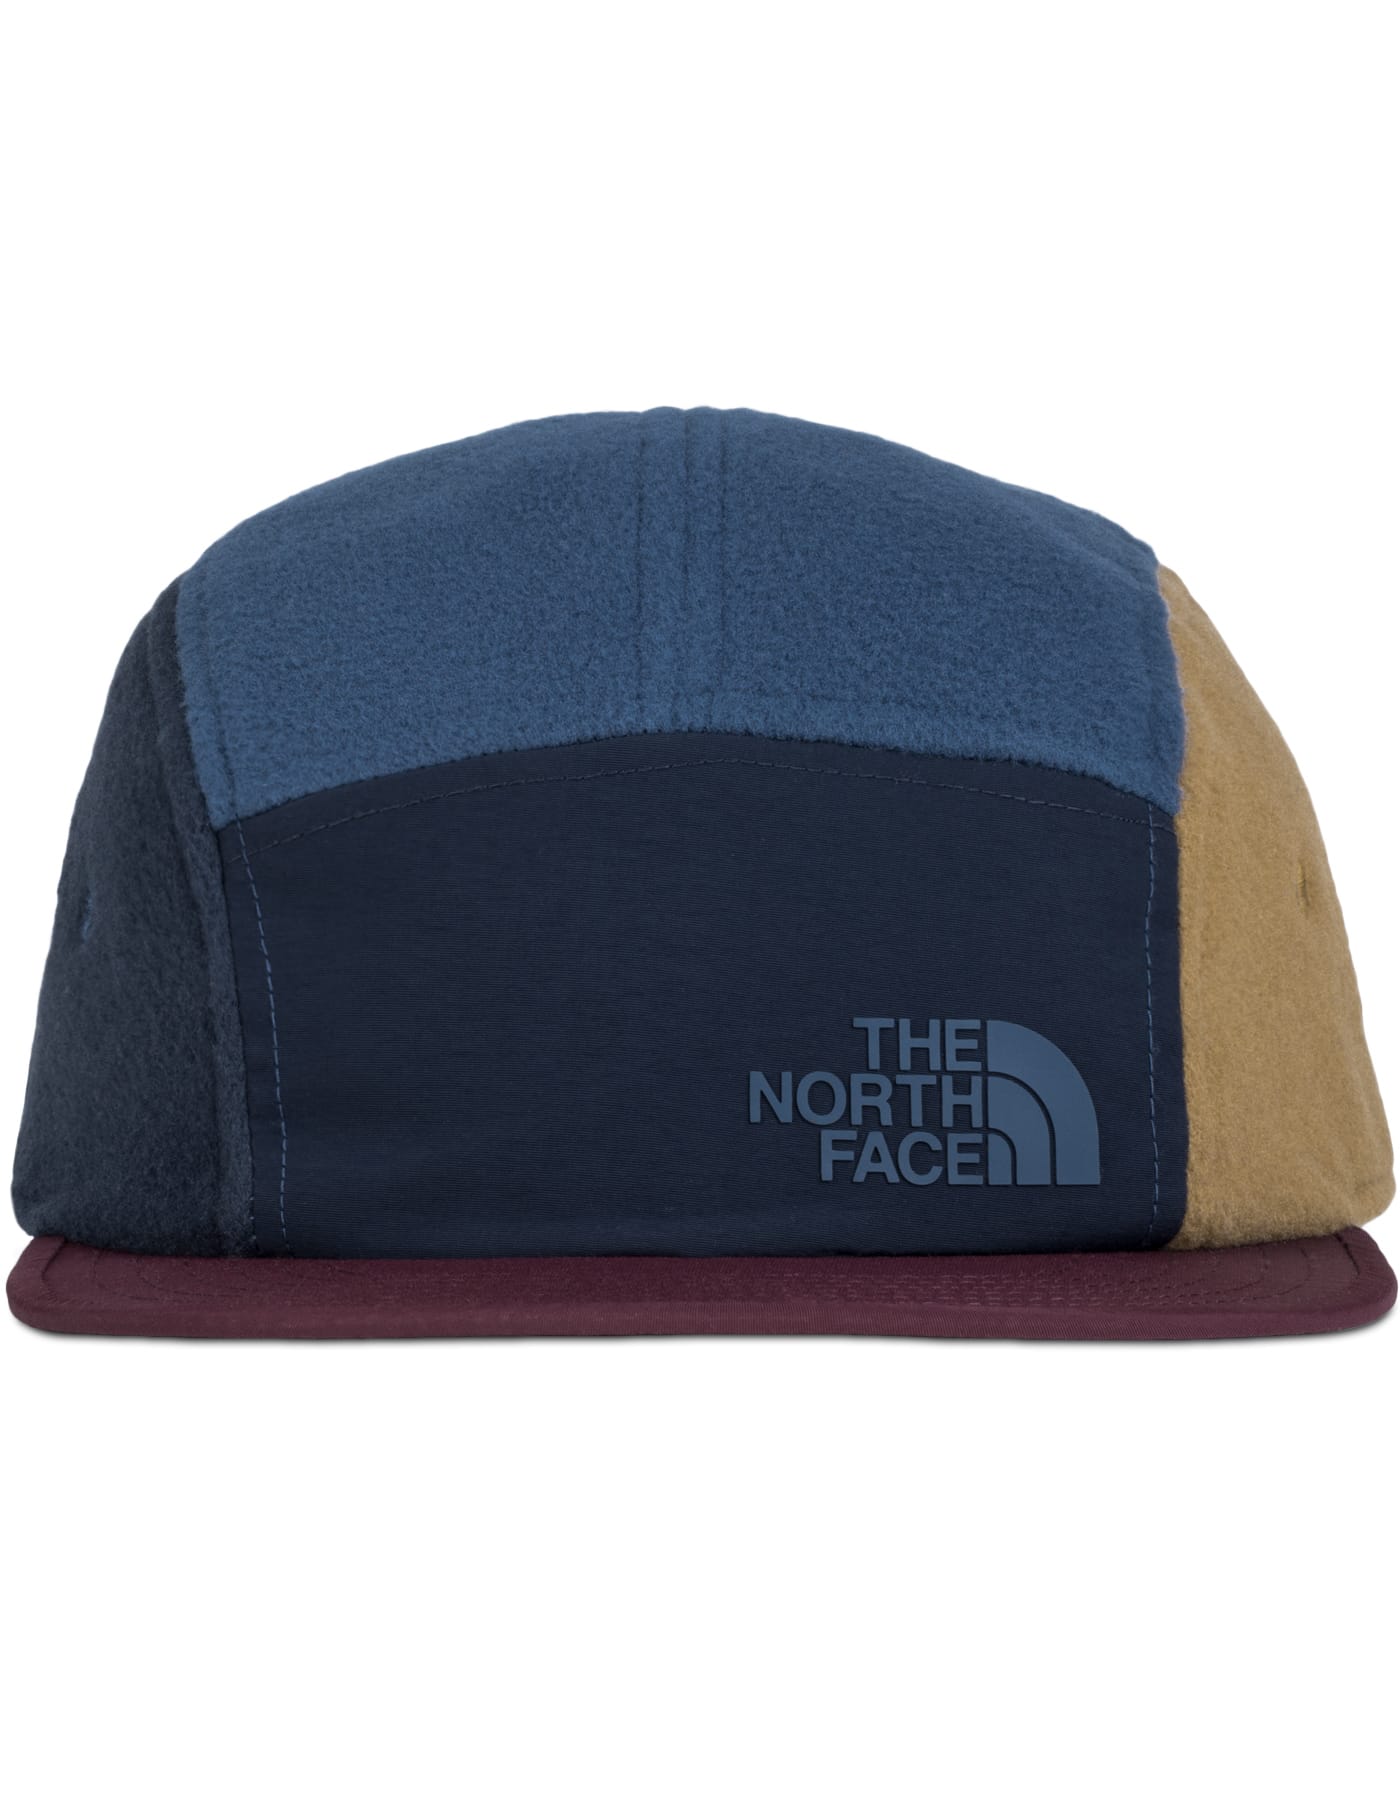 north face denali 5 panel hat